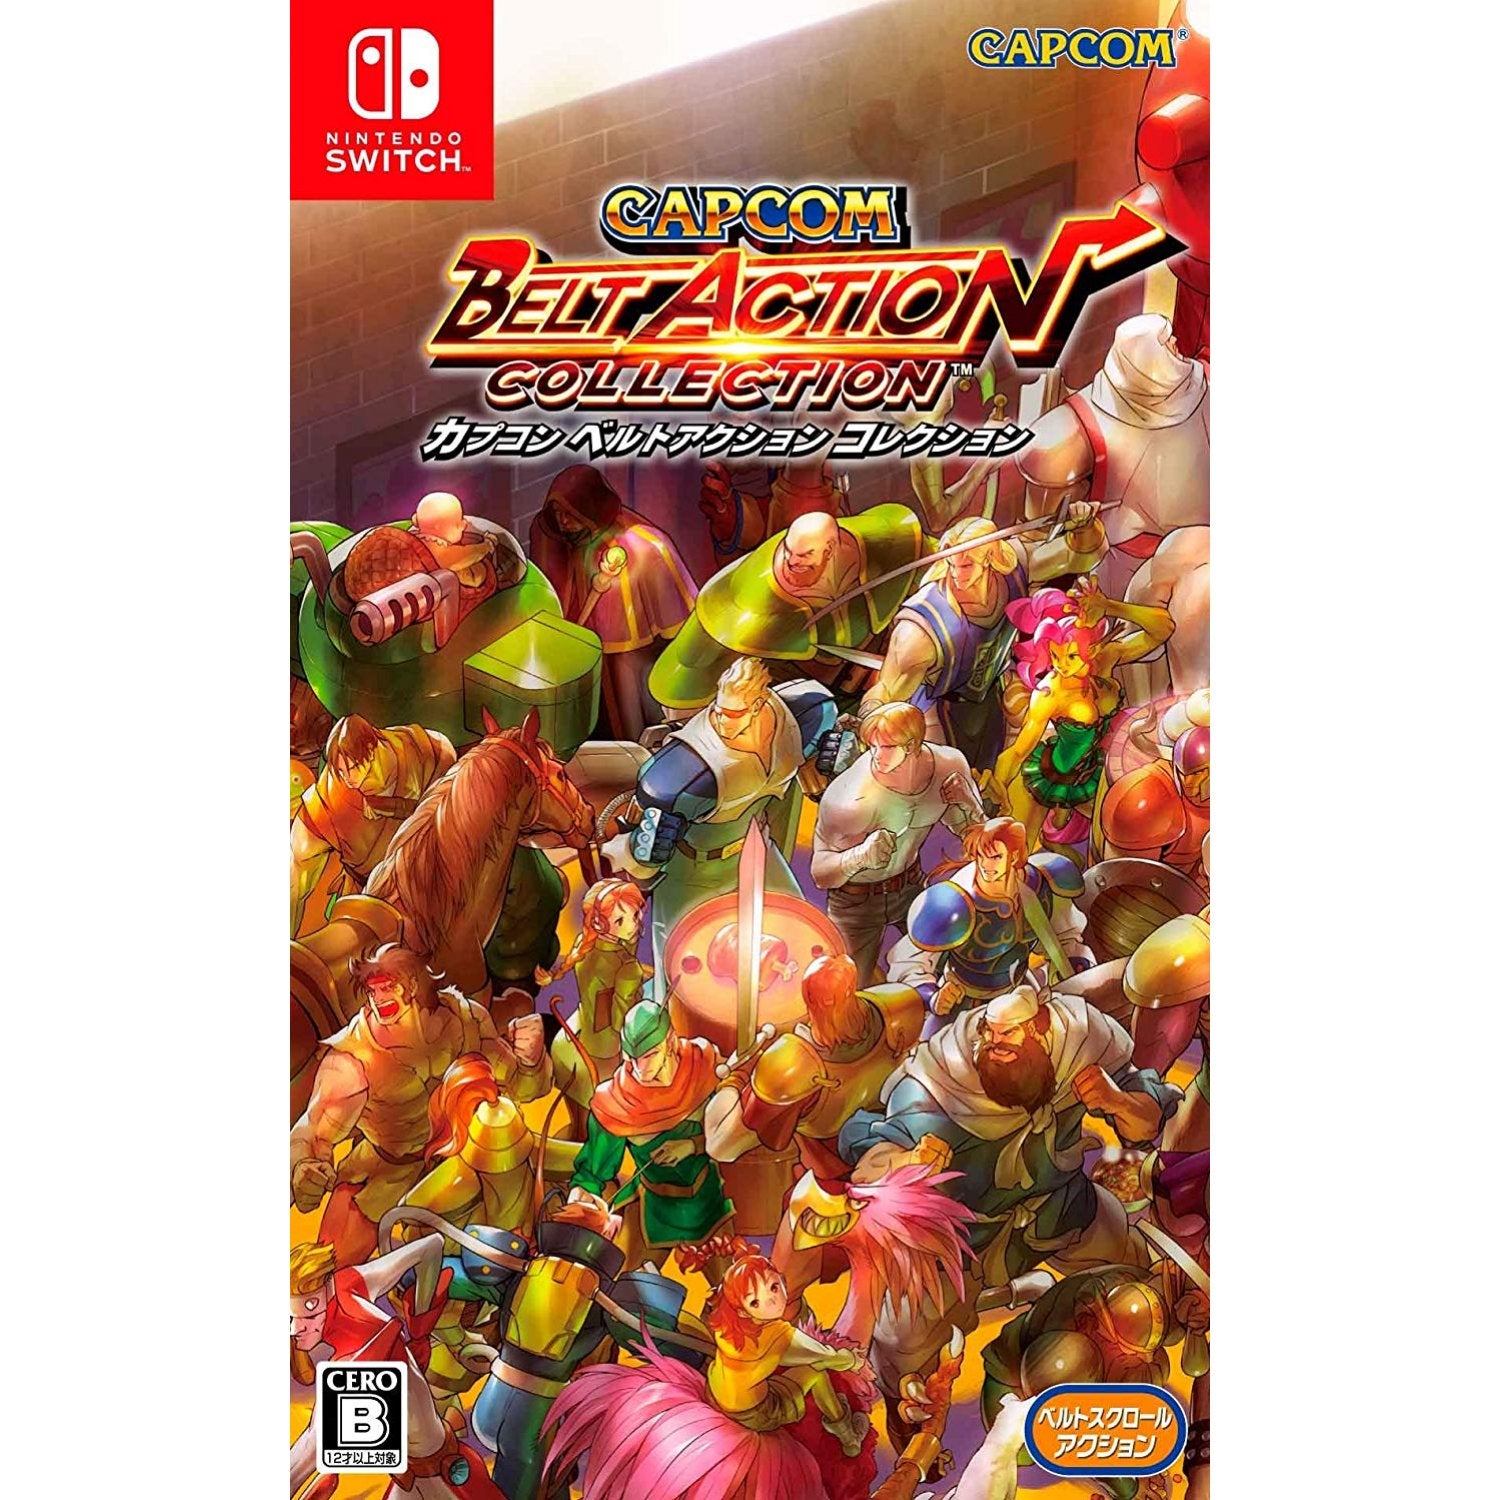 Nintendo Switch Capcom Belt Action Collection